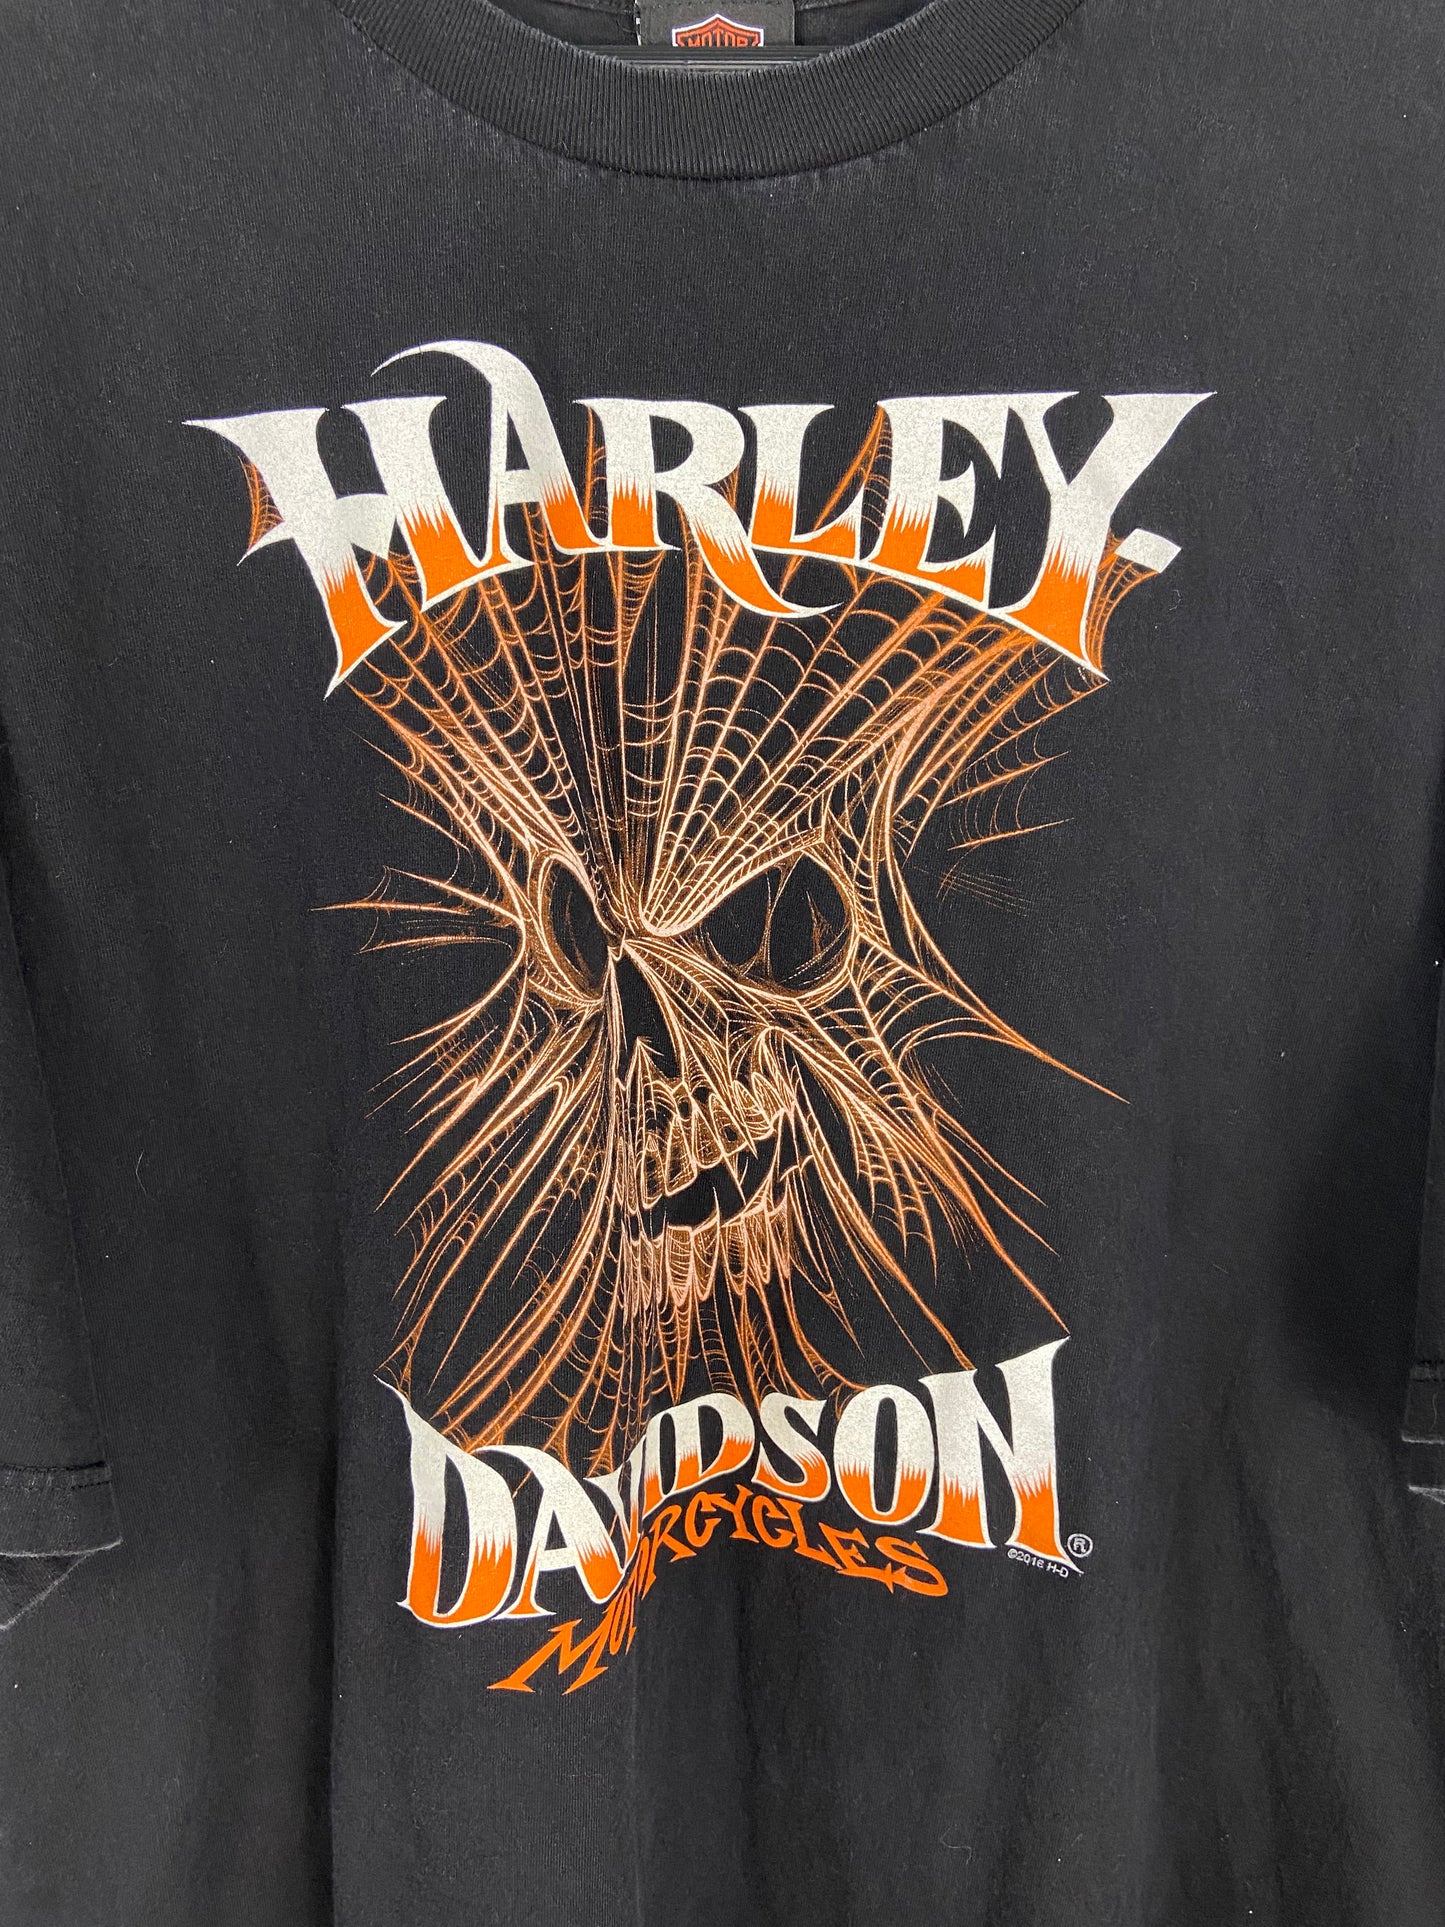 Harley Davidson Skull Web Nashville Tee Sz 3XL